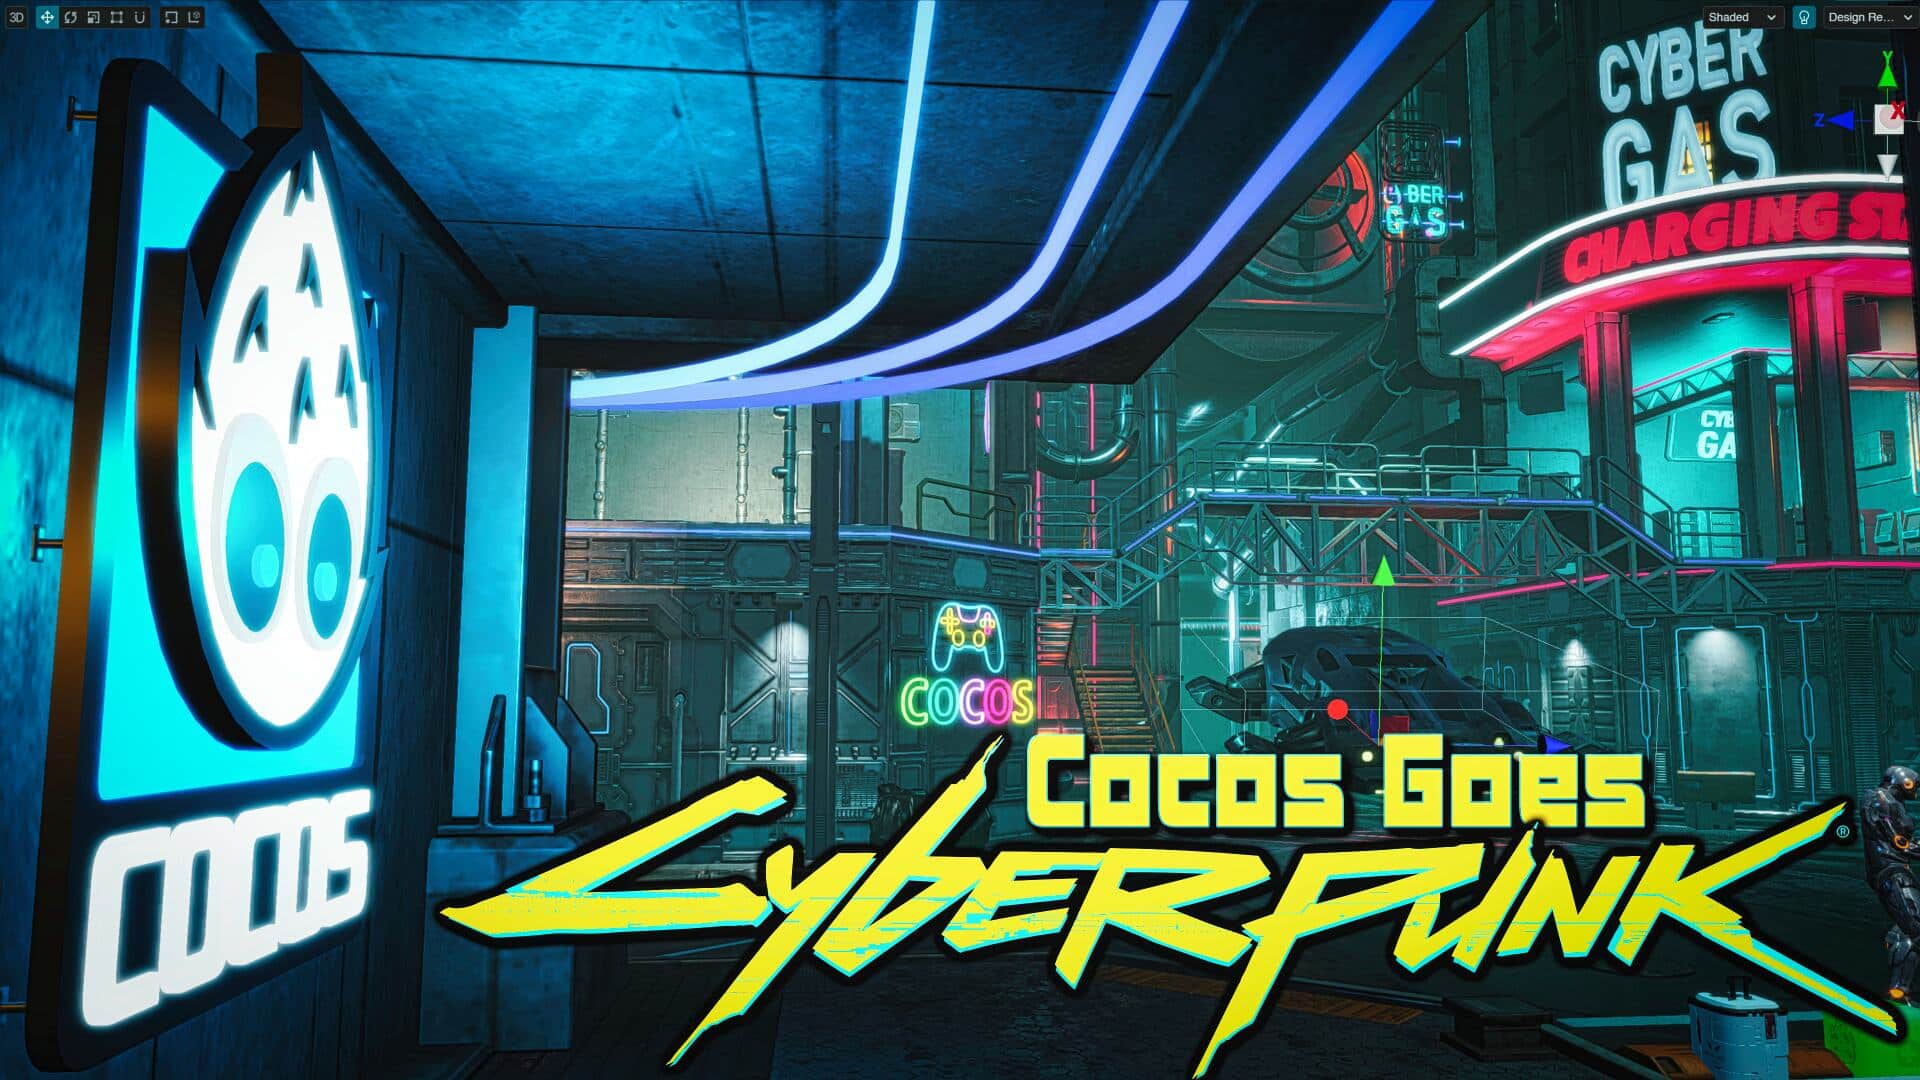 Cocos Creator 3.7 Release + Cyberpunk Demo